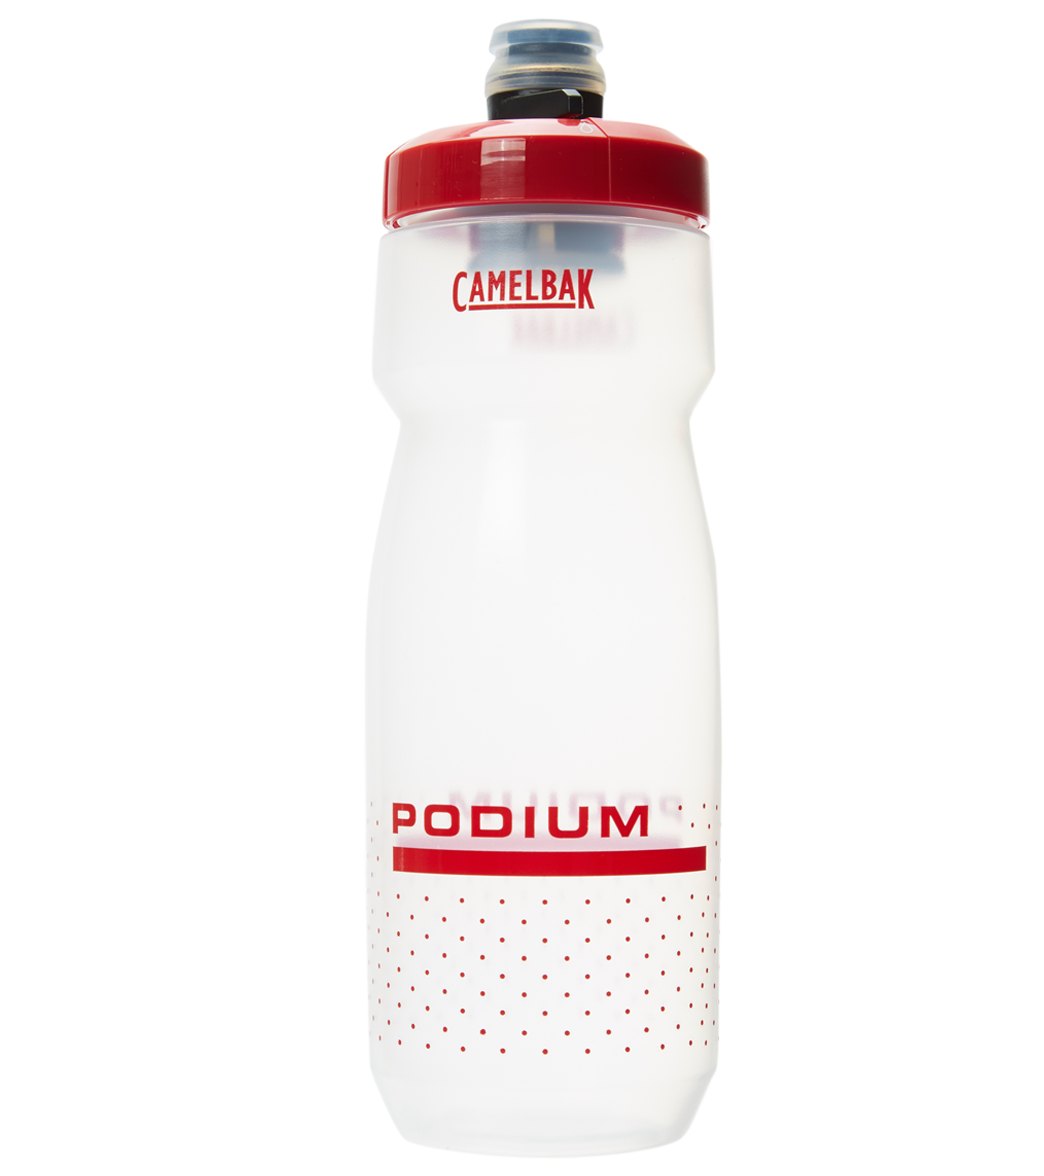 Camelbak Podium 24Oz. Water Bottle - Fiery Red - Swimoutlet.com